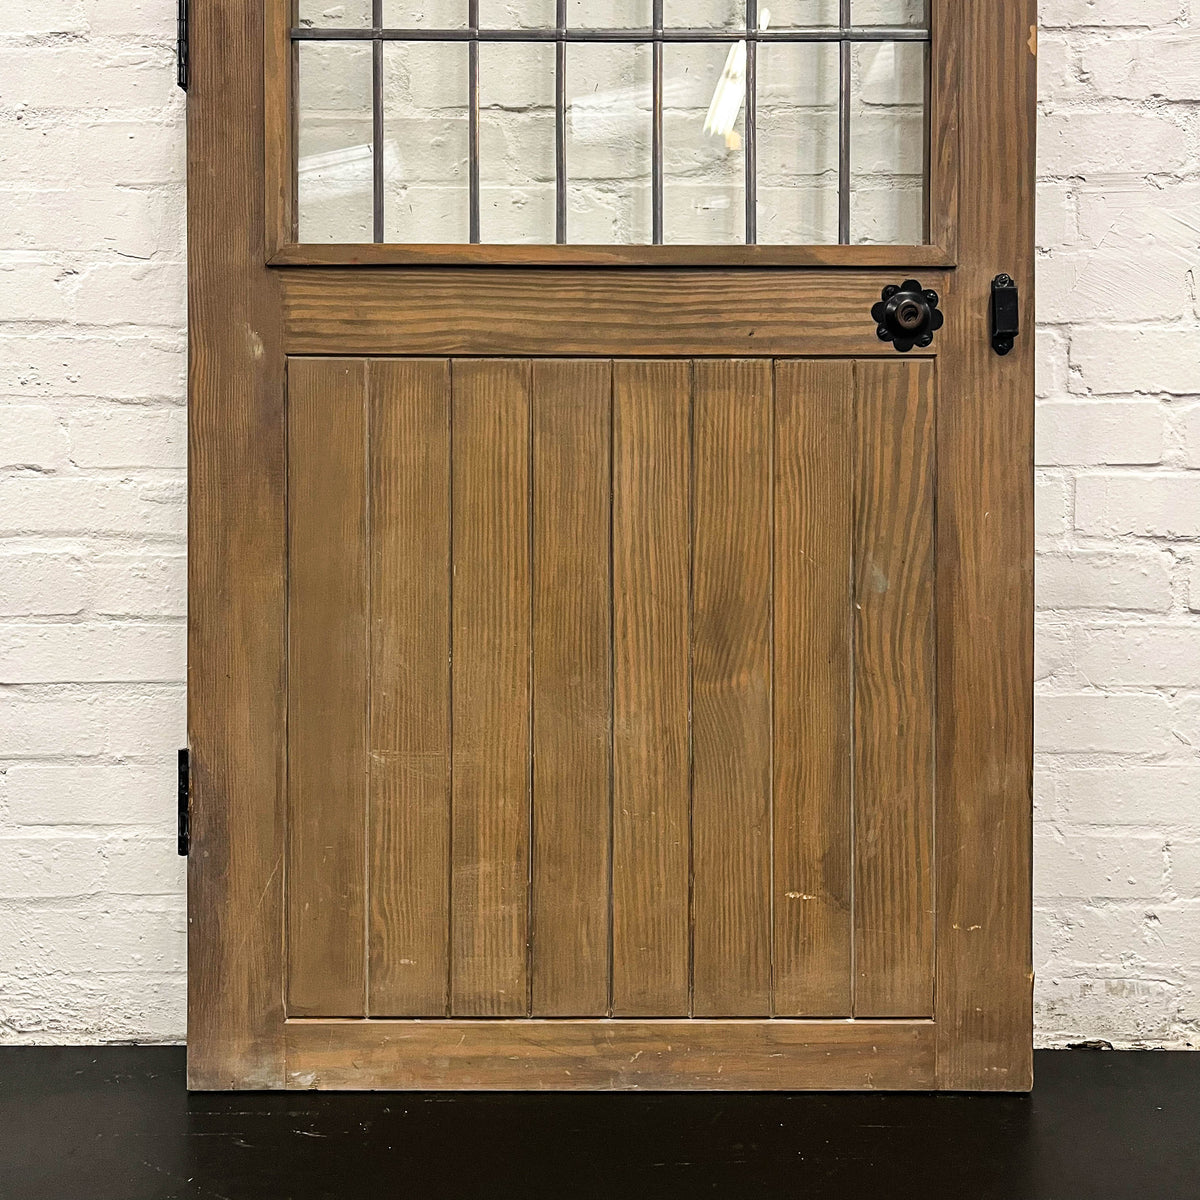 Antique Victorian Glazed Latch Door - 194cm x 81cm | The Architectural Forum